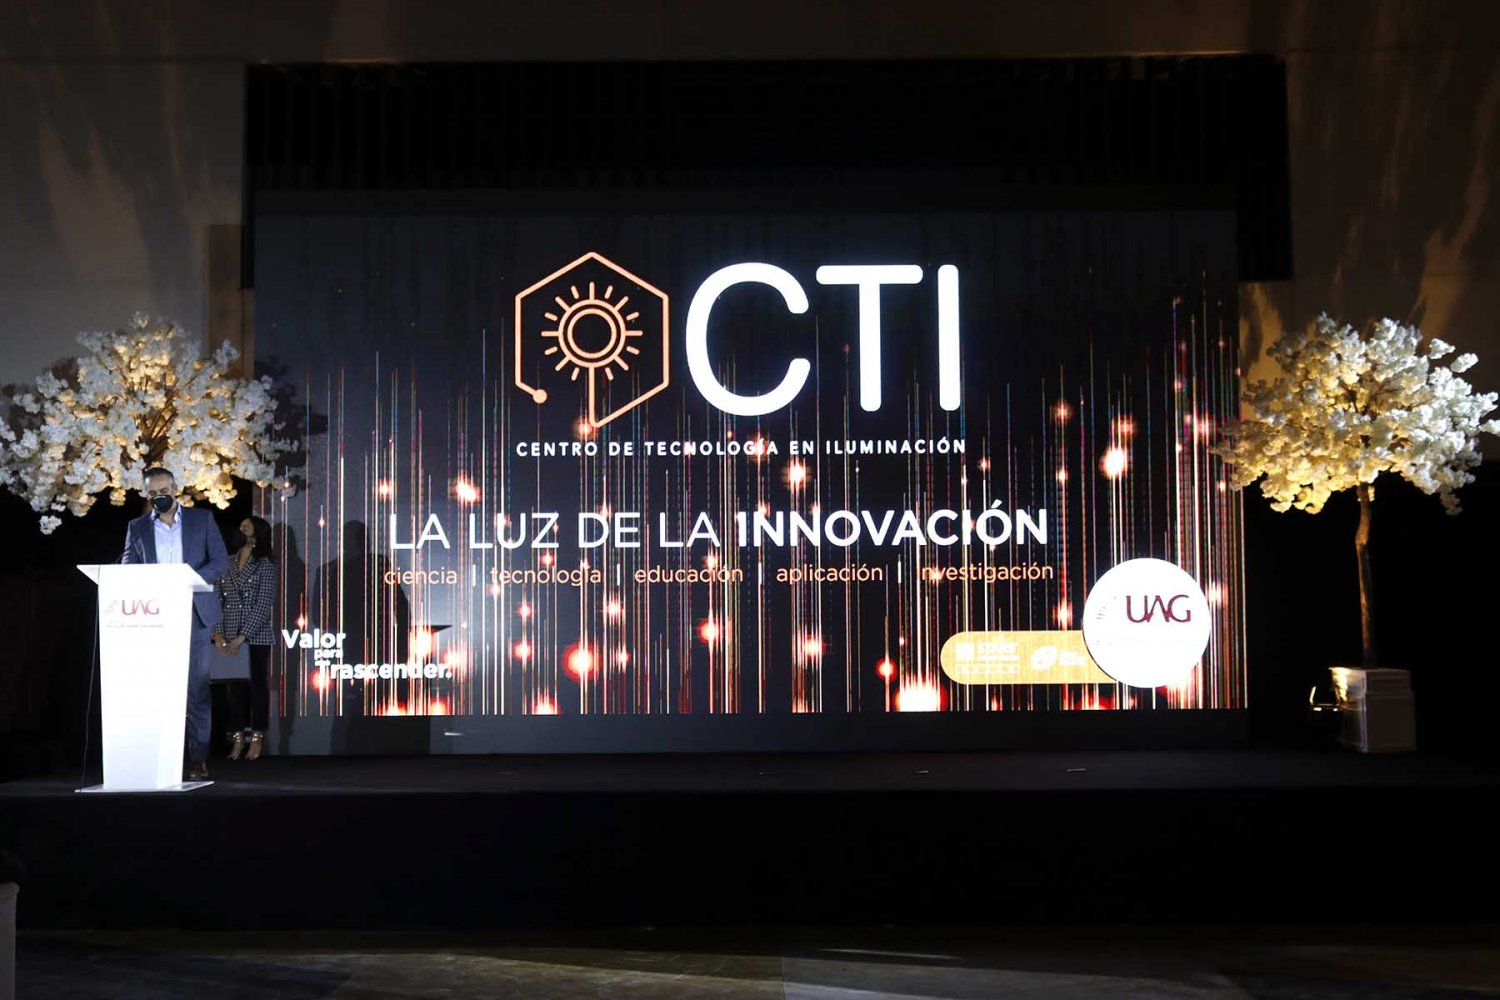 Photo of a stage with a backdrop that reads CTI Centro de Tecnologia en Iluminacion, LA LUZ DE INNOVACION